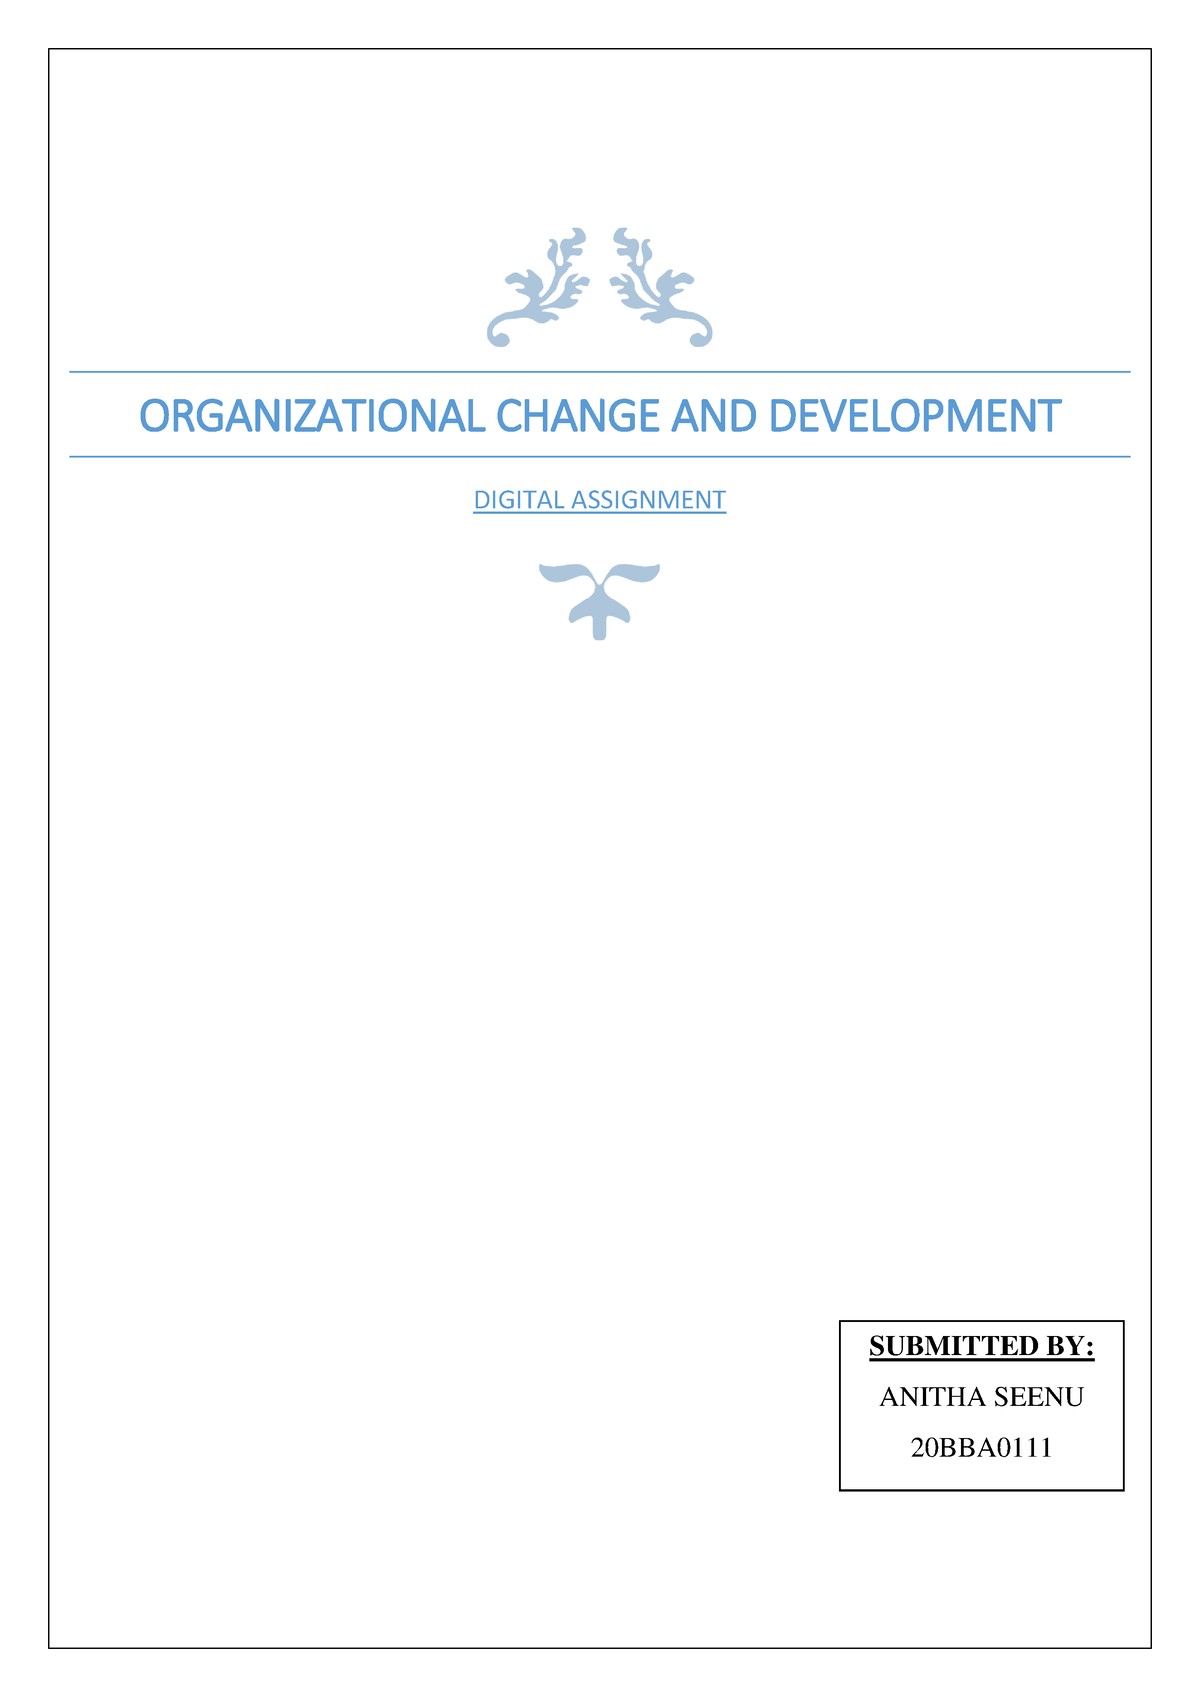 netflix organizational change & structure case study 2022